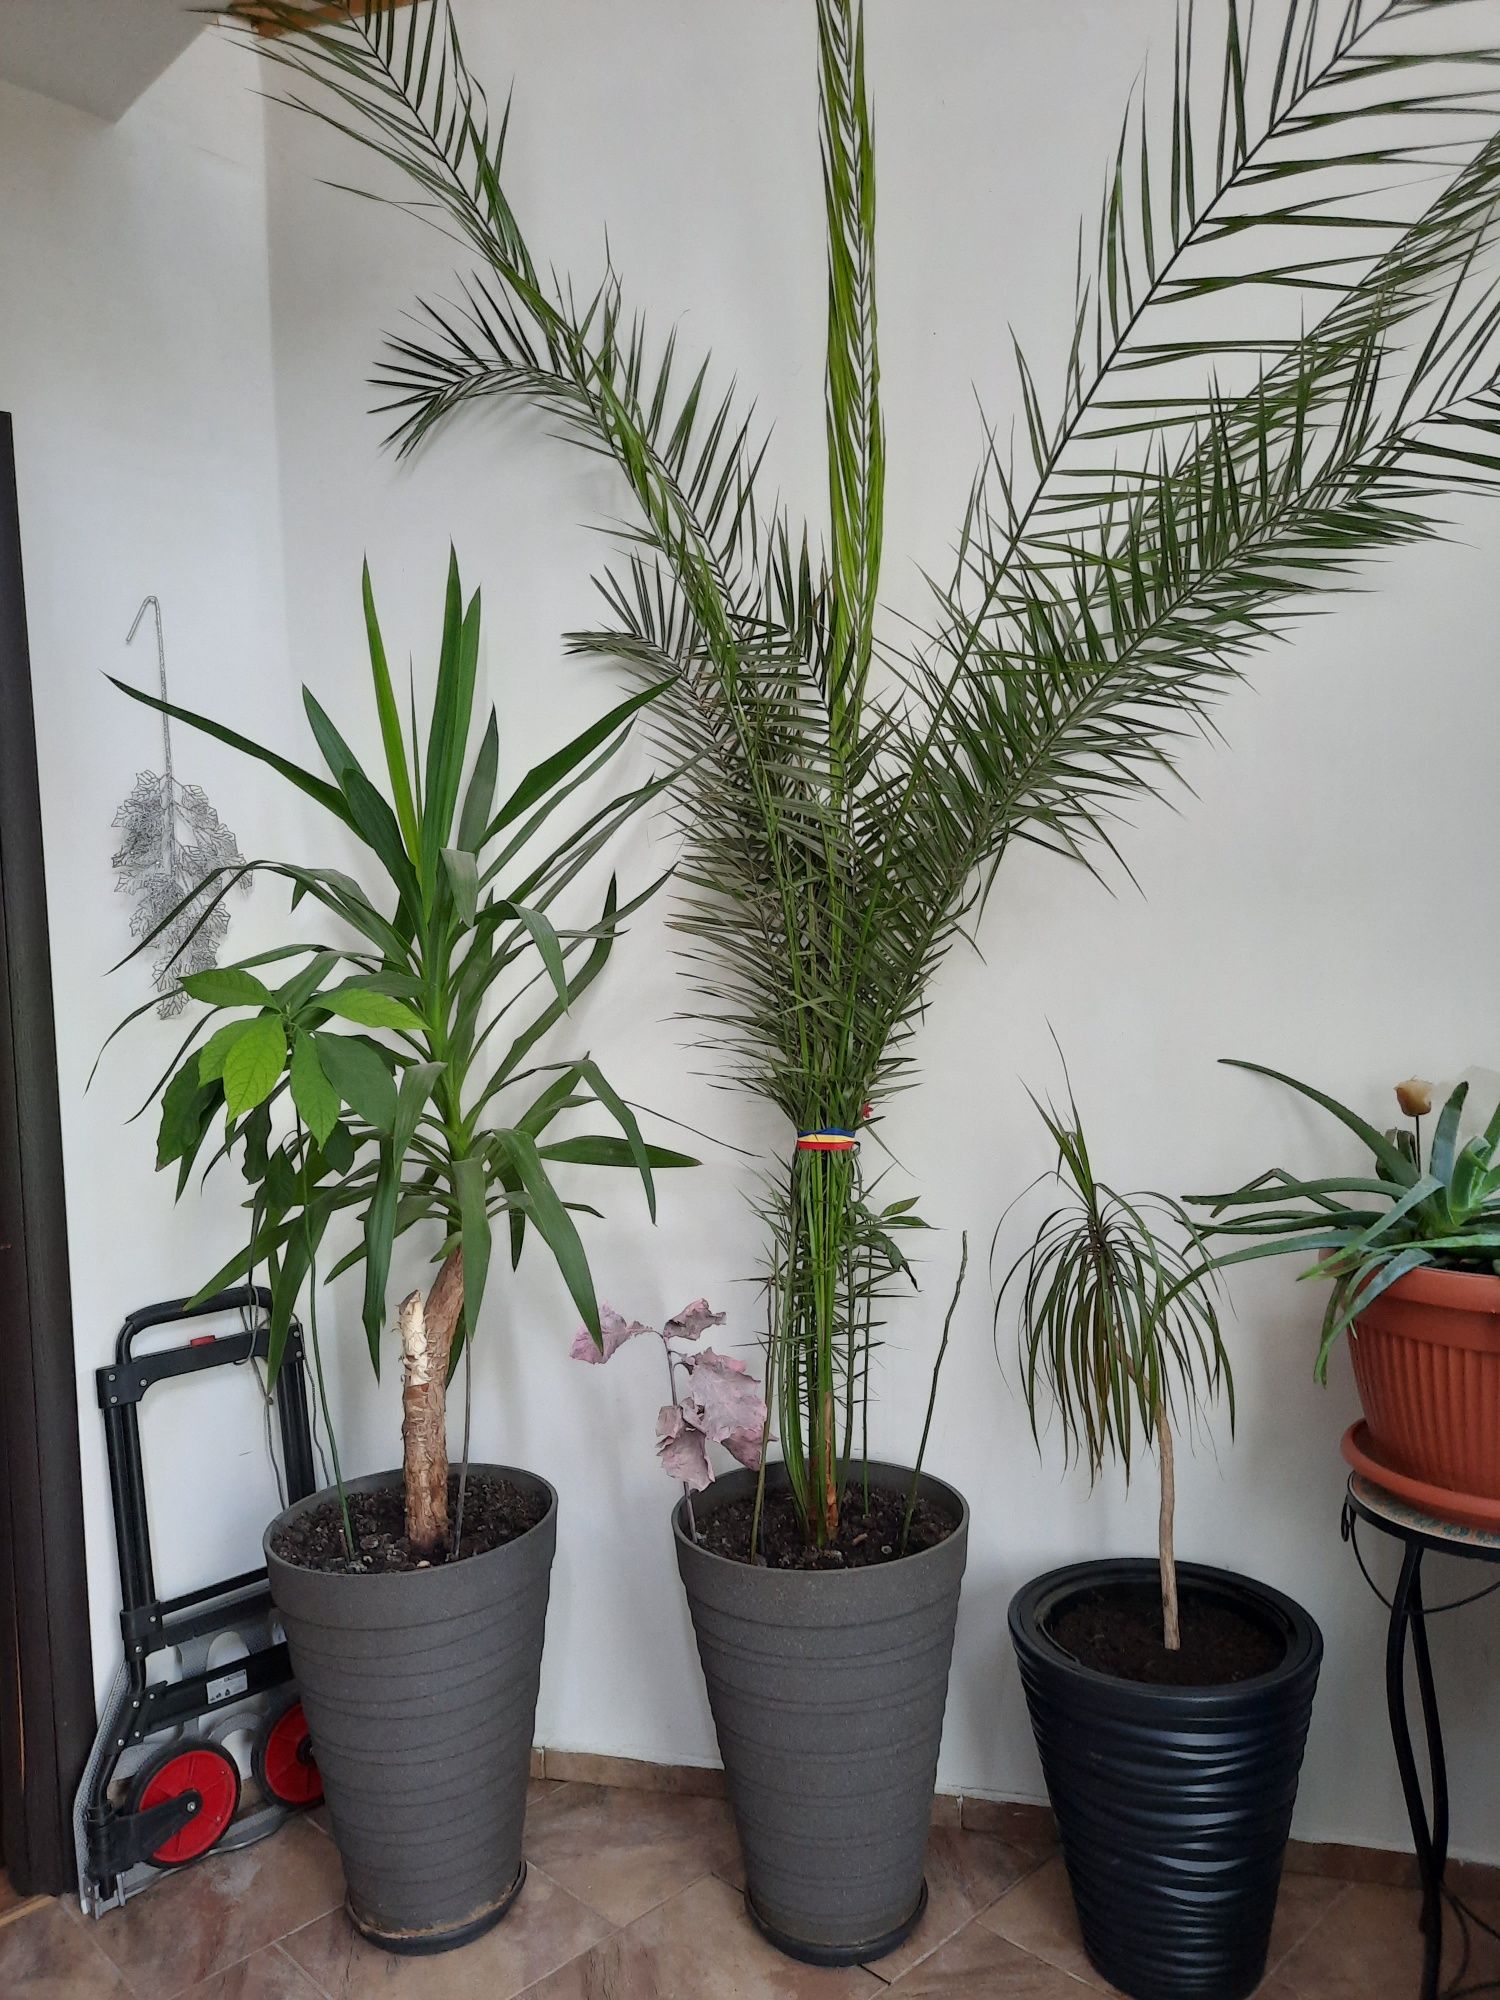 Plante decorative,Yuka,Phoenix,Tuia,Magnolia,Luleaua turcului